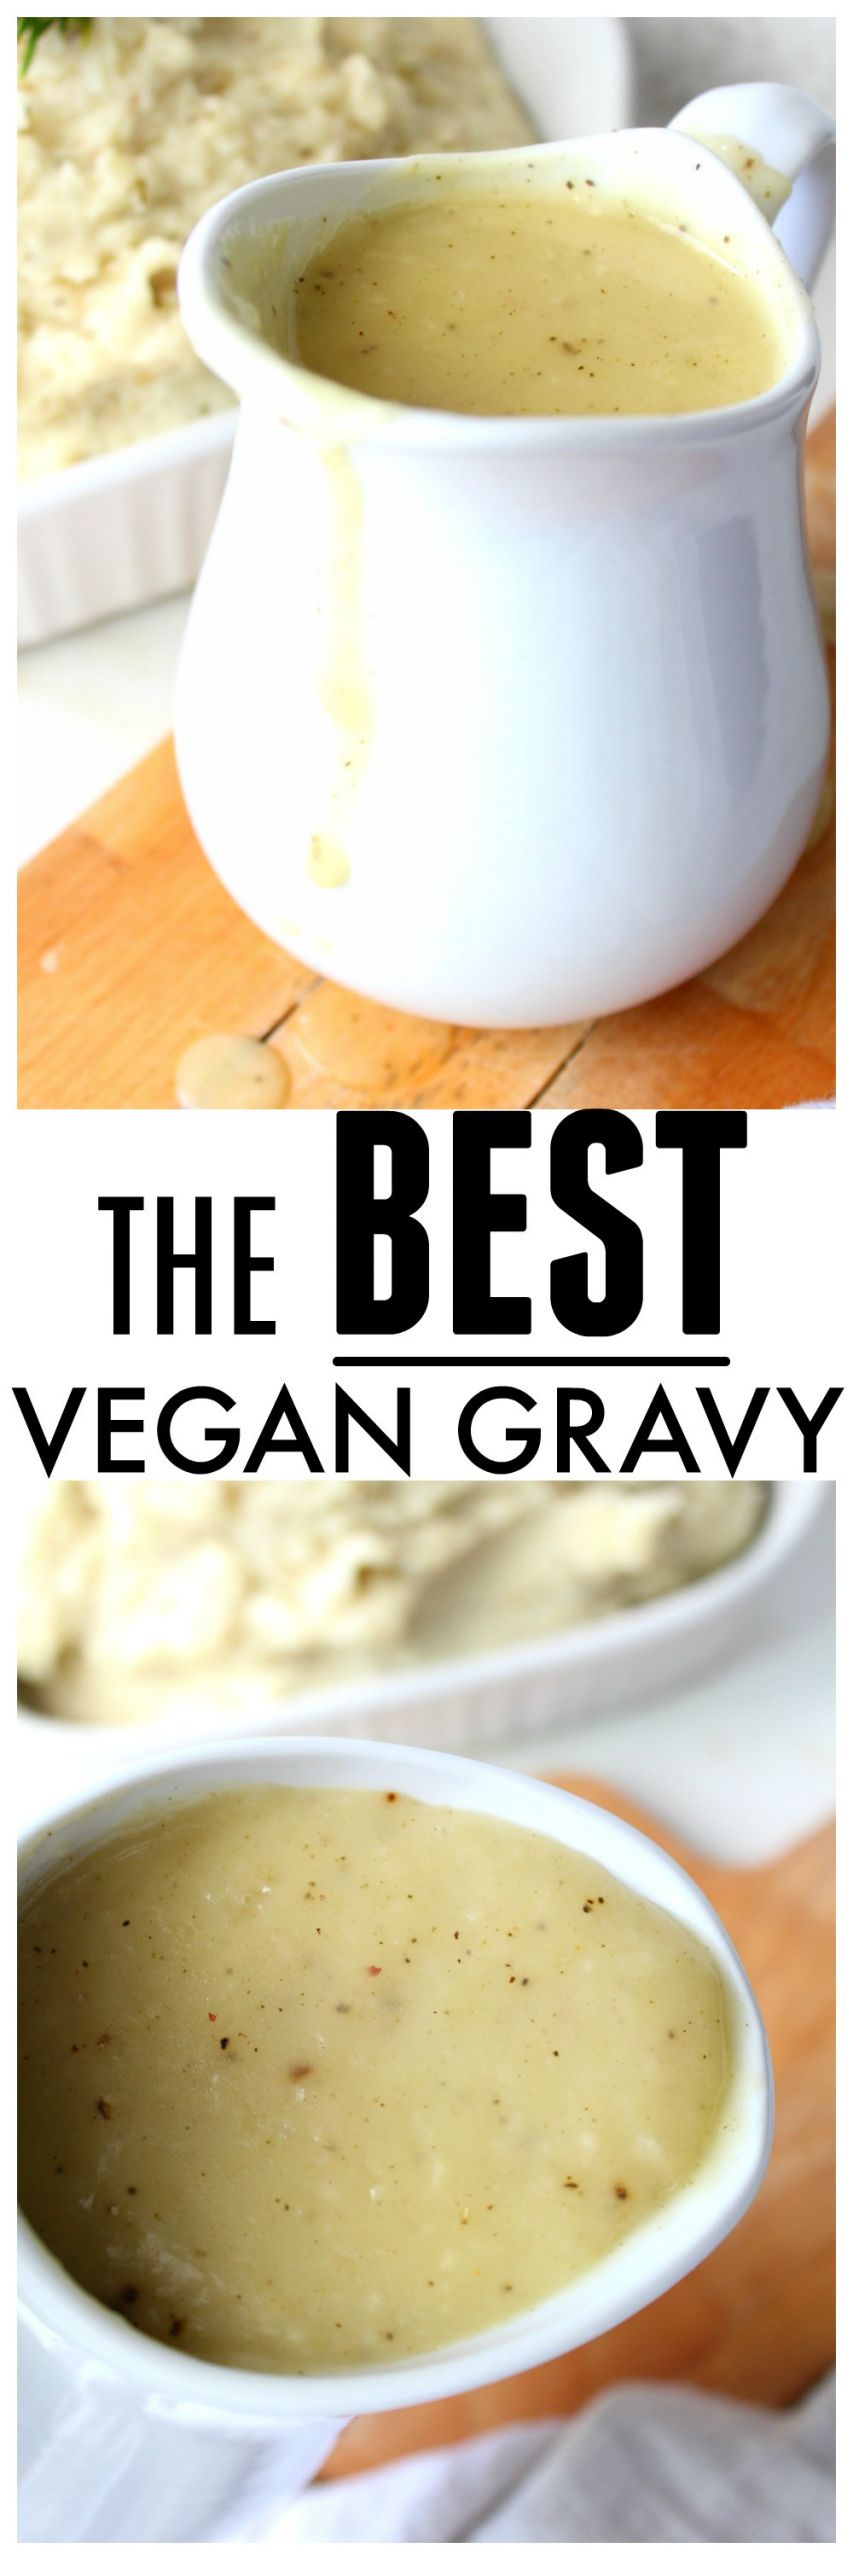 Best Vegan Gravy
 The Best Vegan Gravy This Savory Vegan